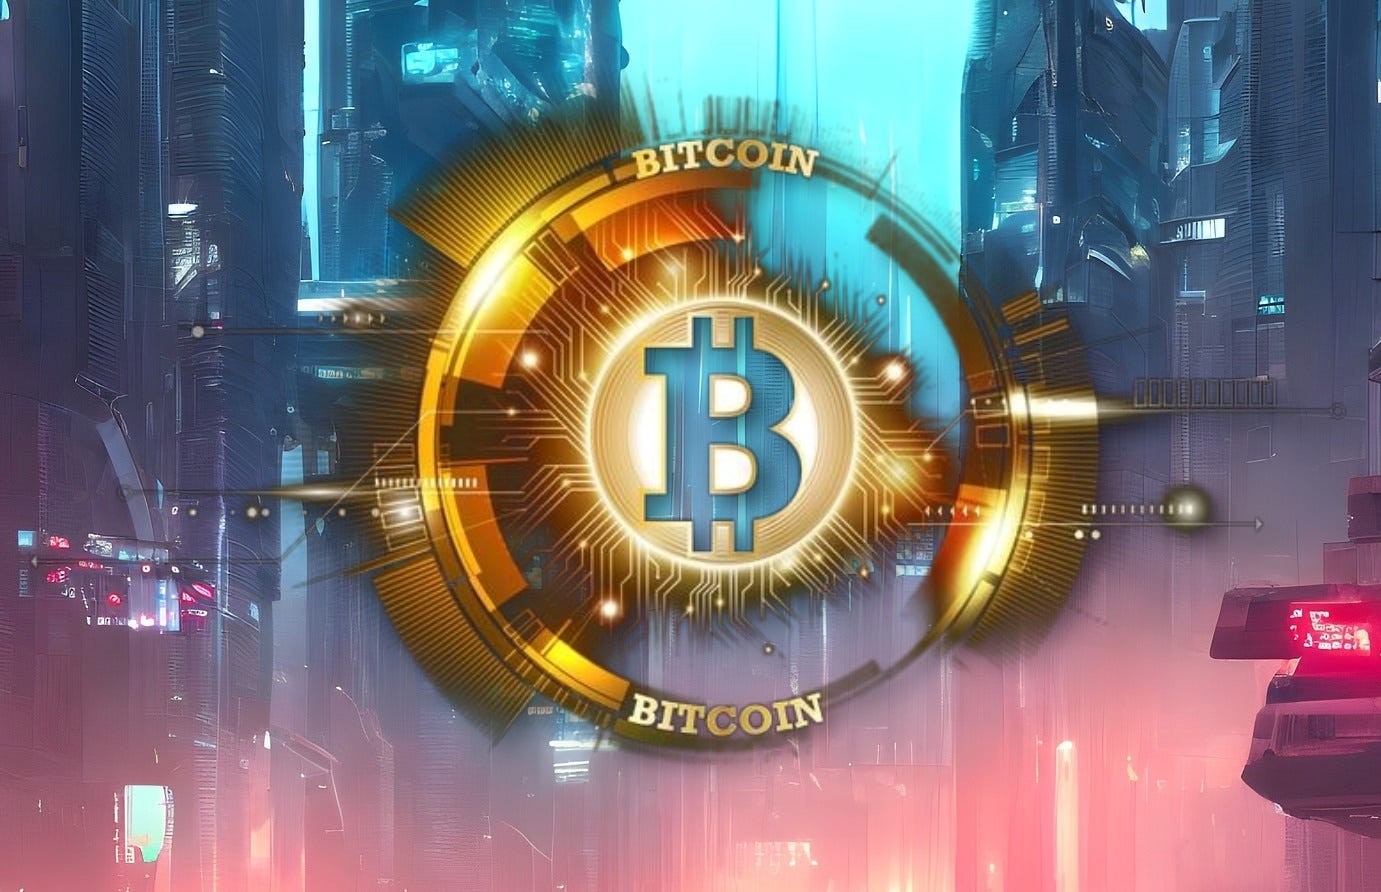 BlackRock: Bitcoin = Progress? Boldest Crypto Ad Ever?